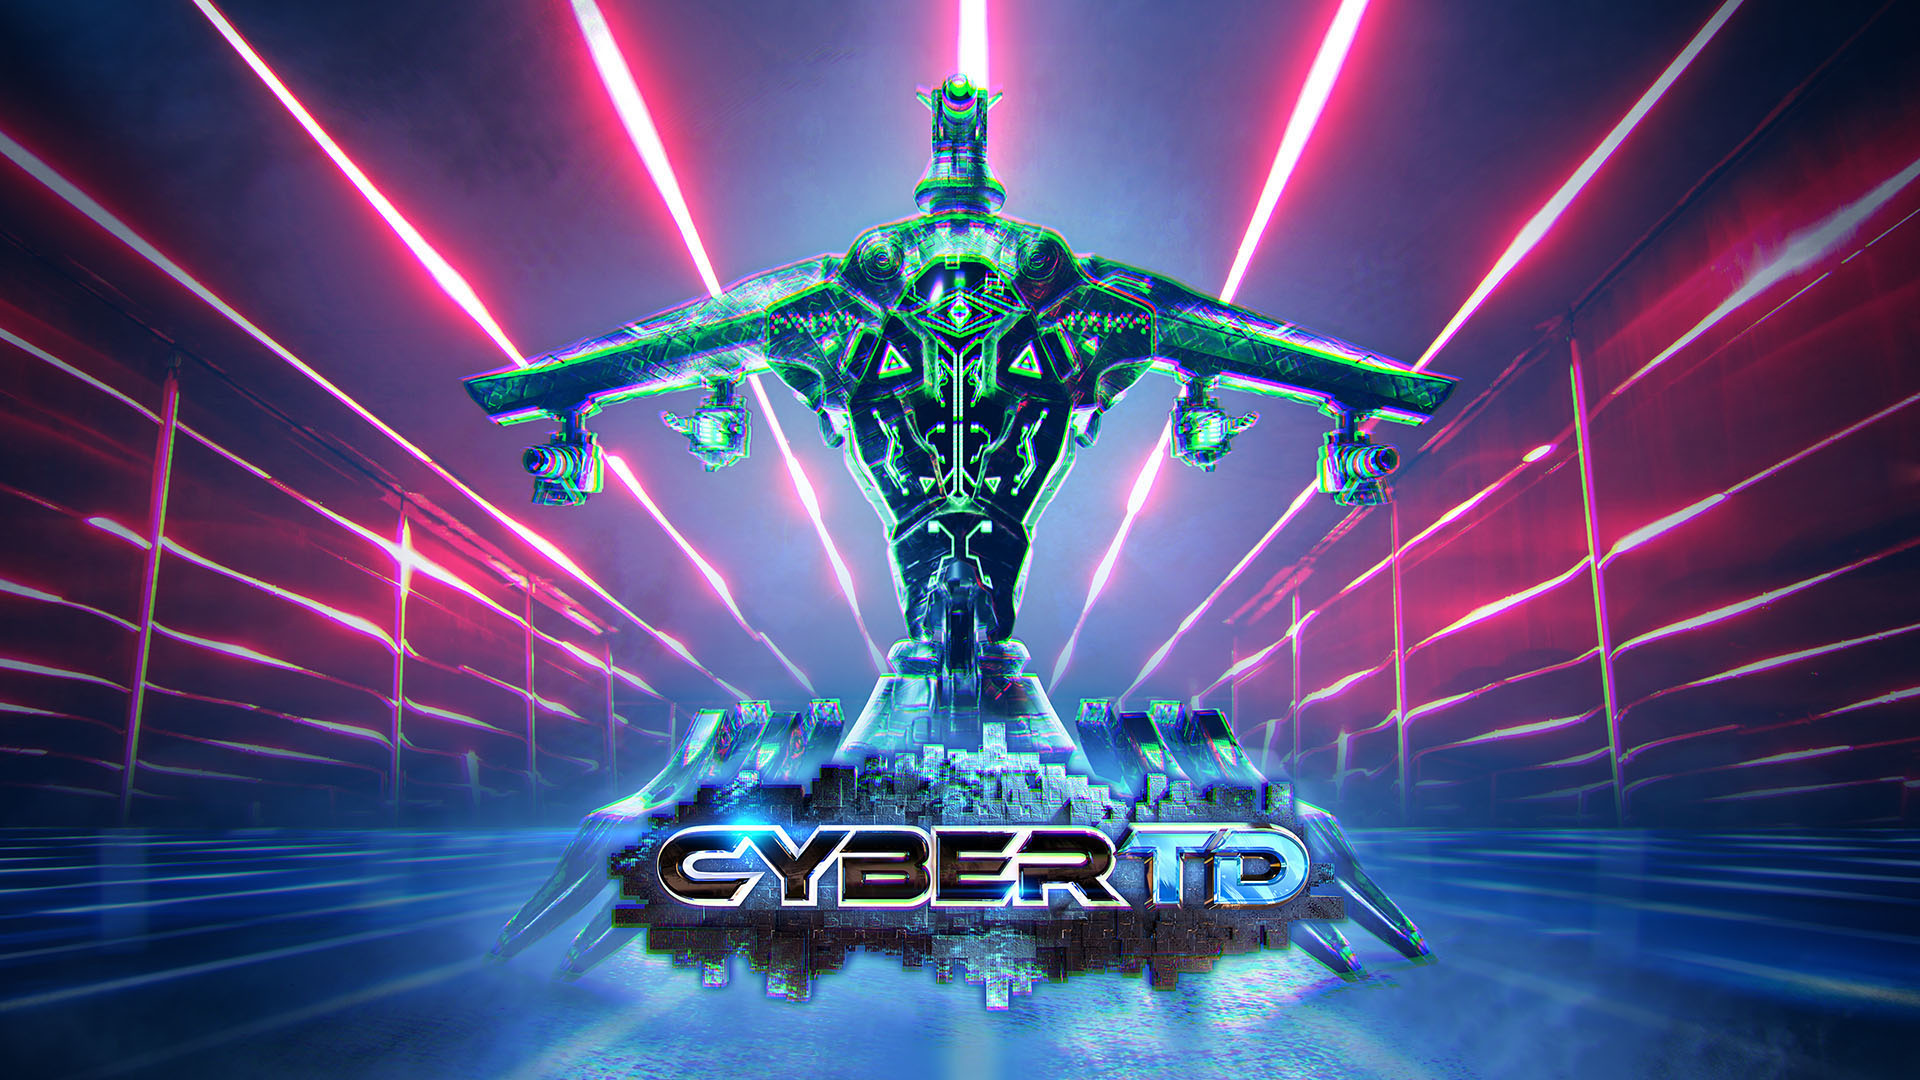 CyberTD free downloads